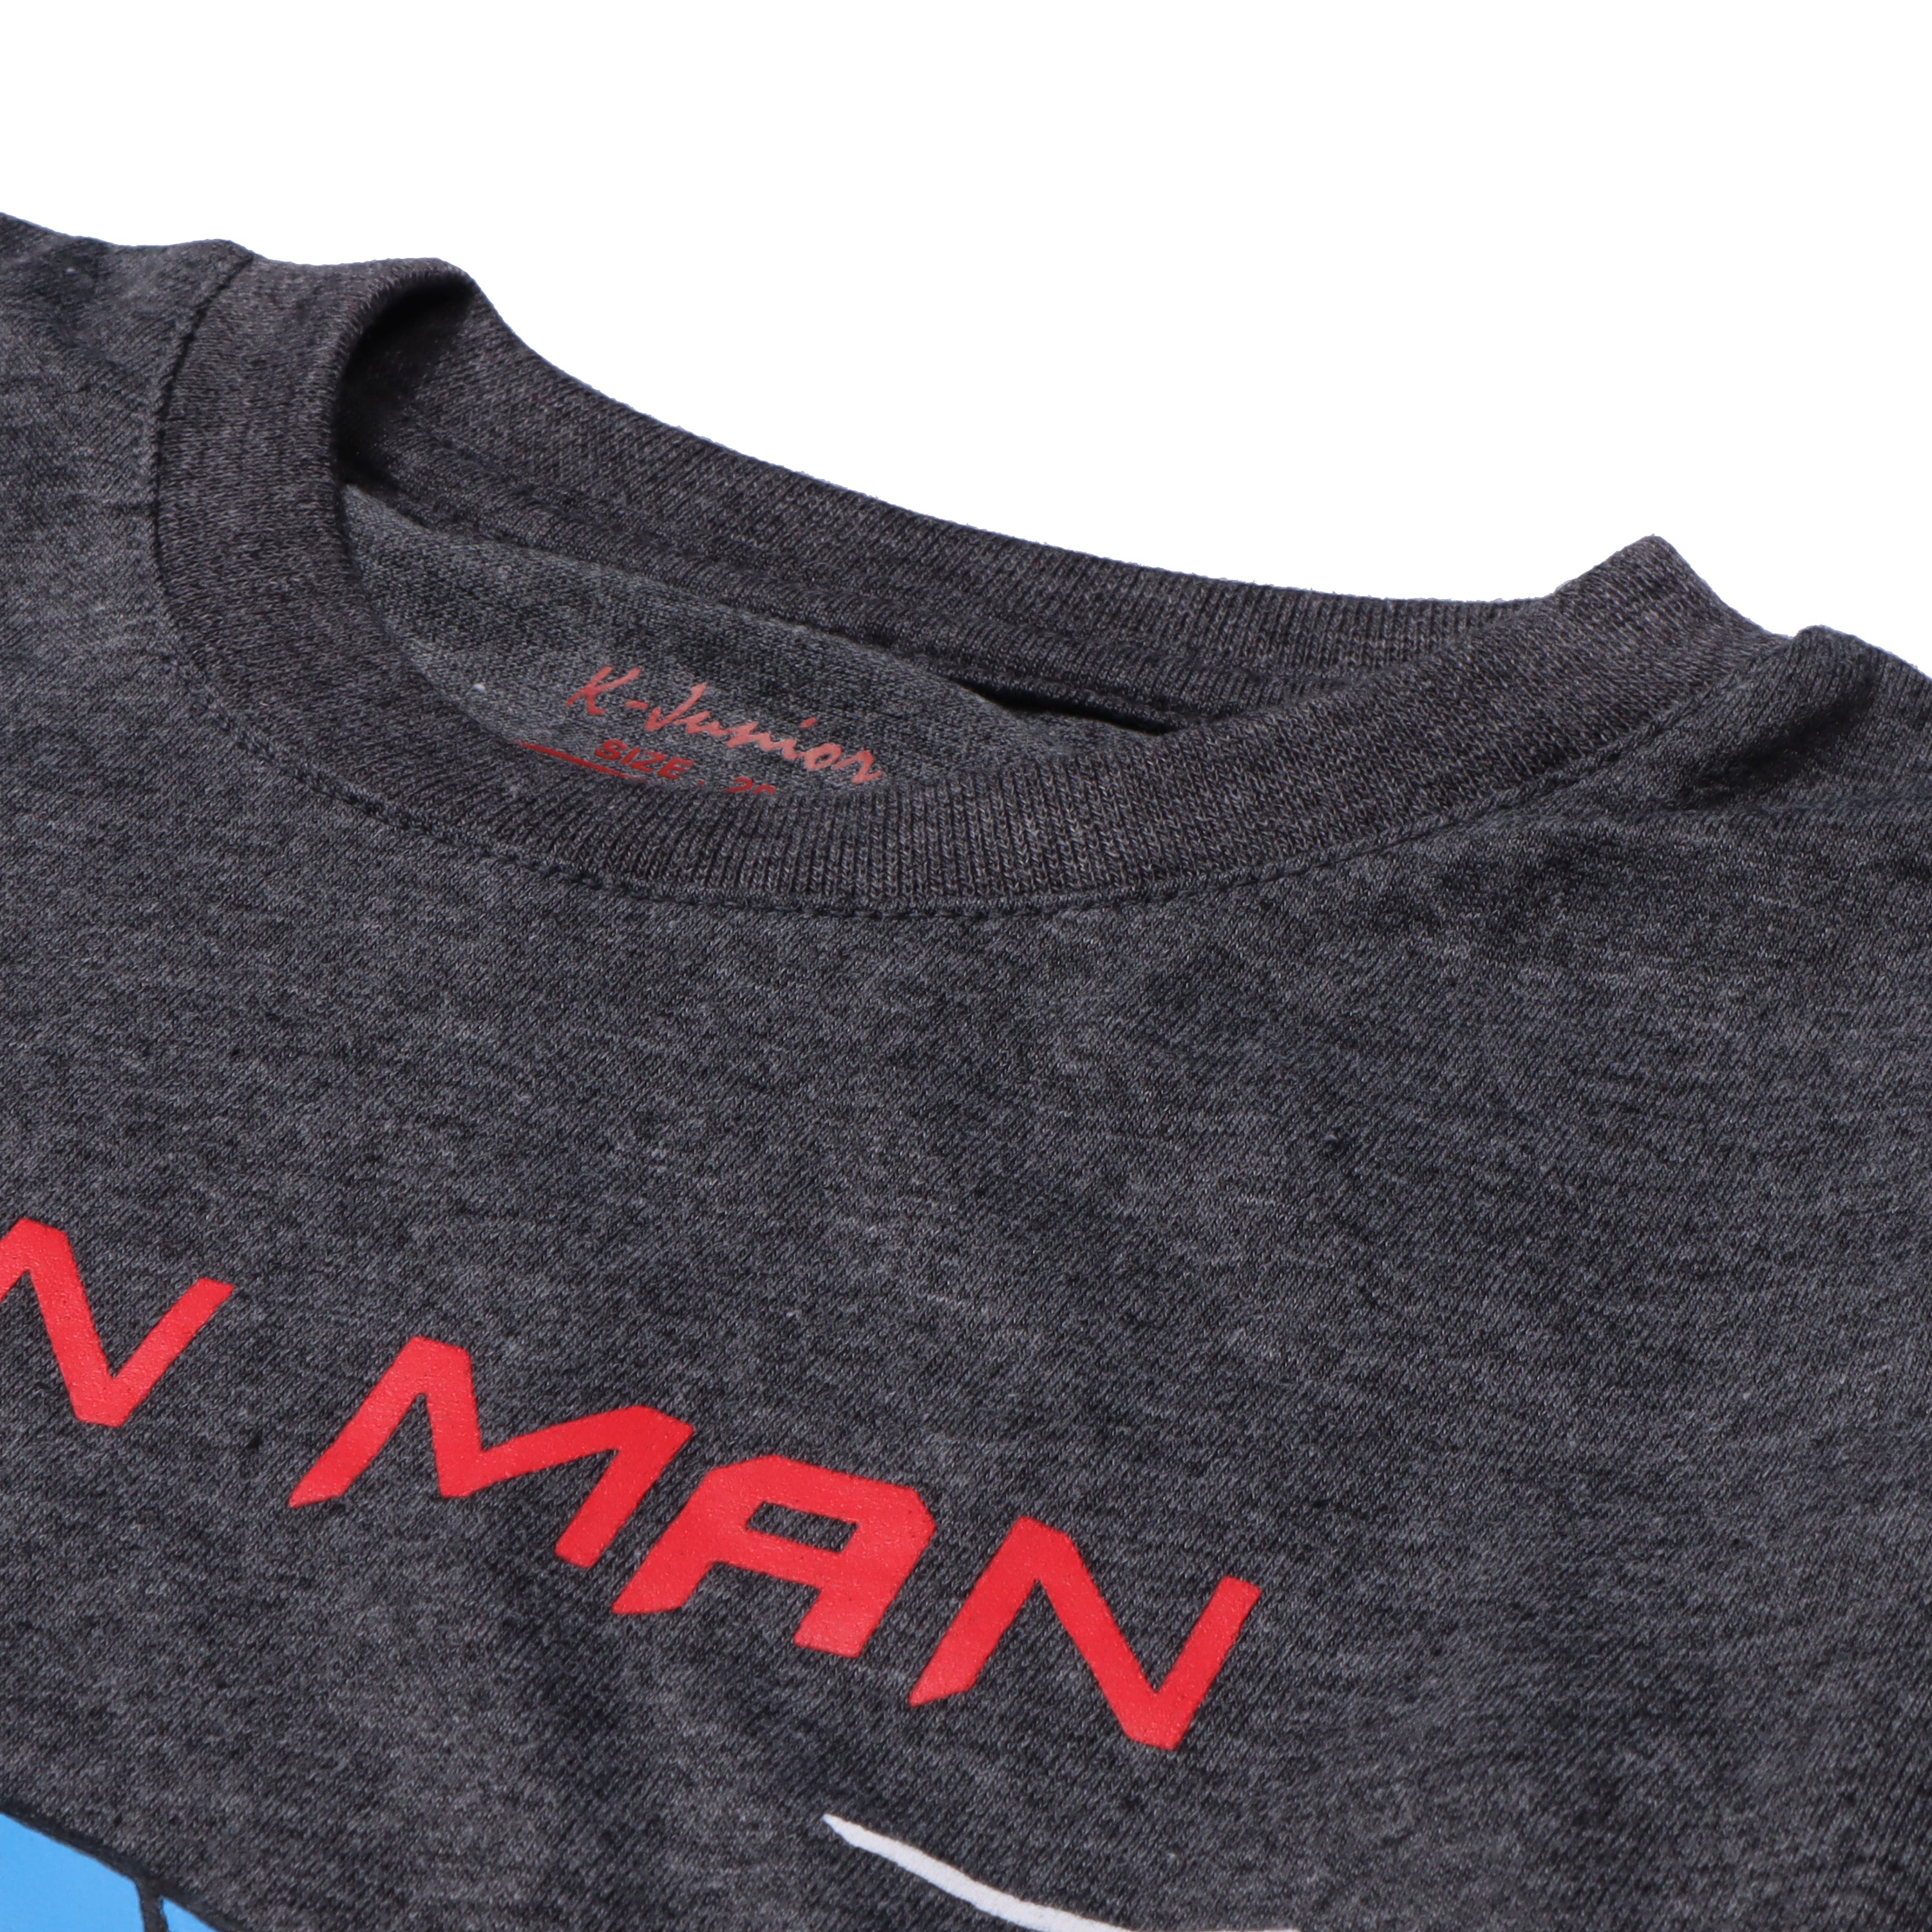 Boys Half Sleeves-Printed T-Shirt (Iron-Man)